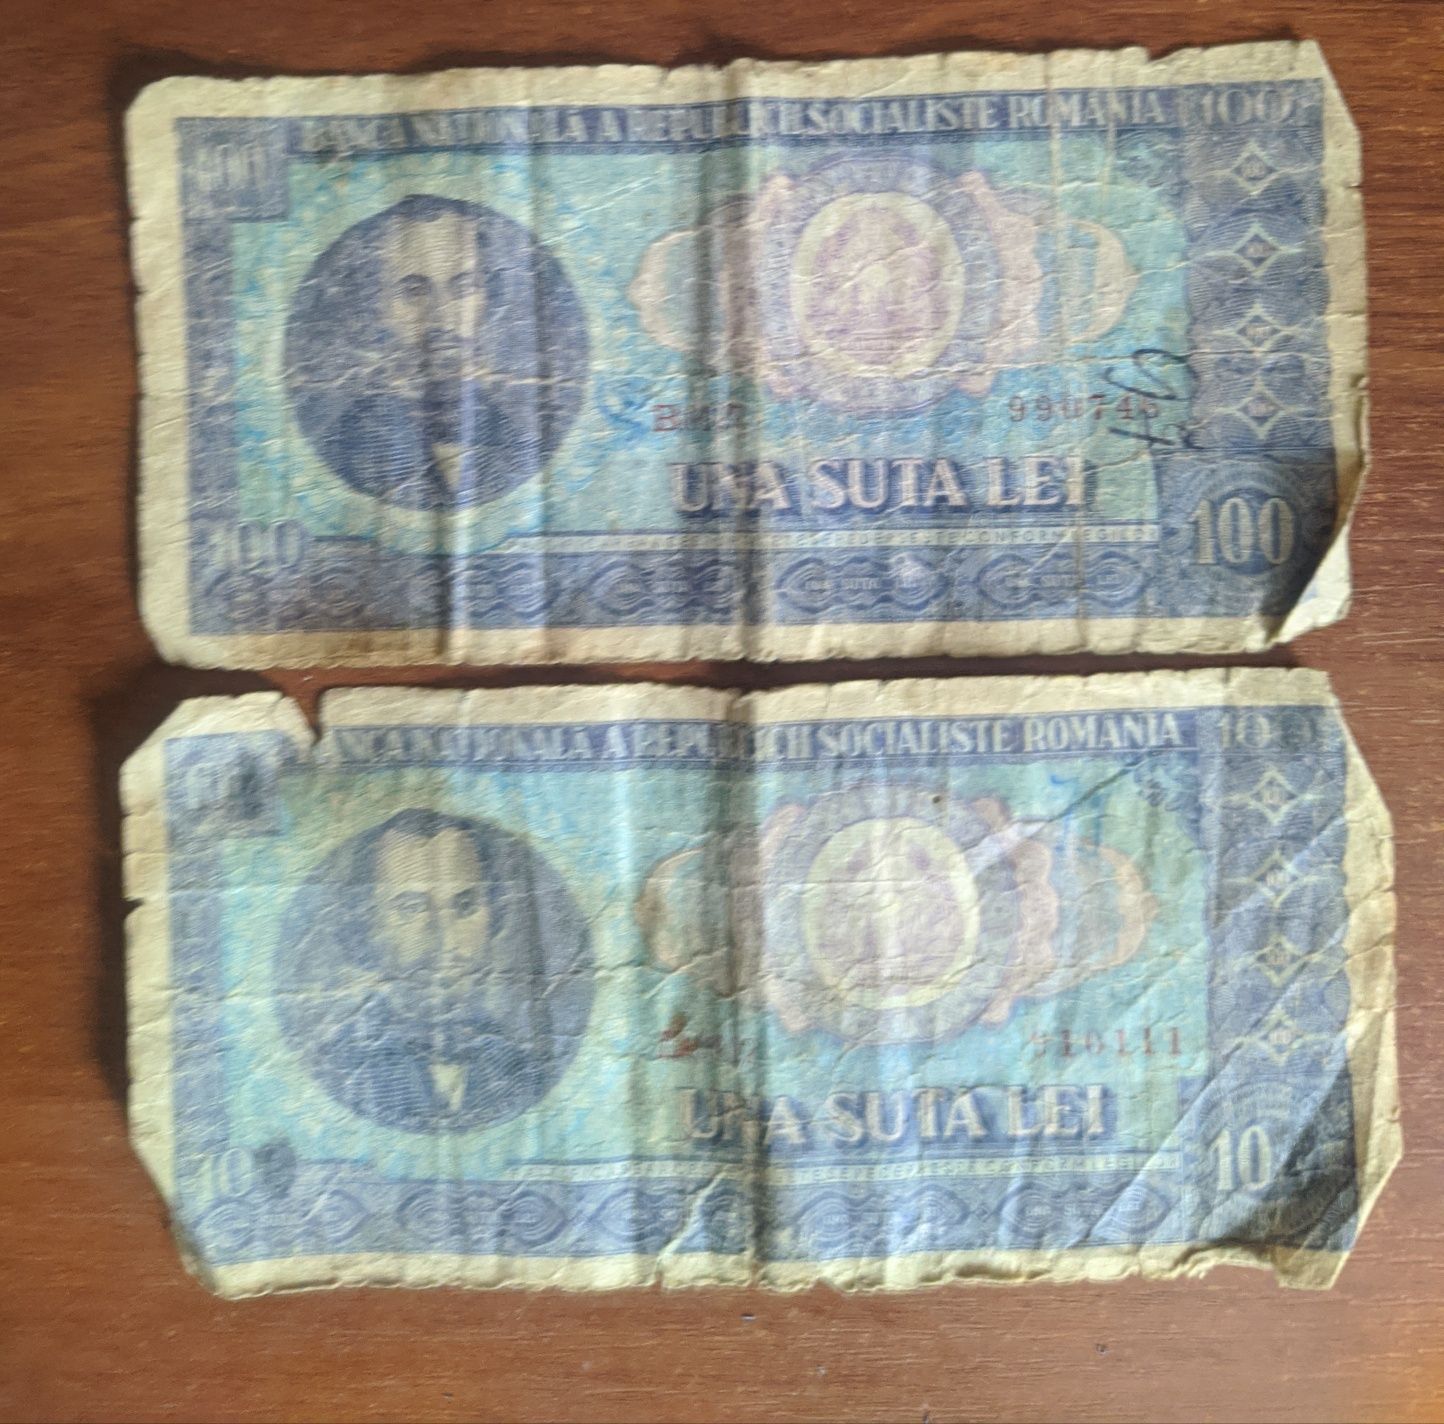 100 лей валюта Румынии